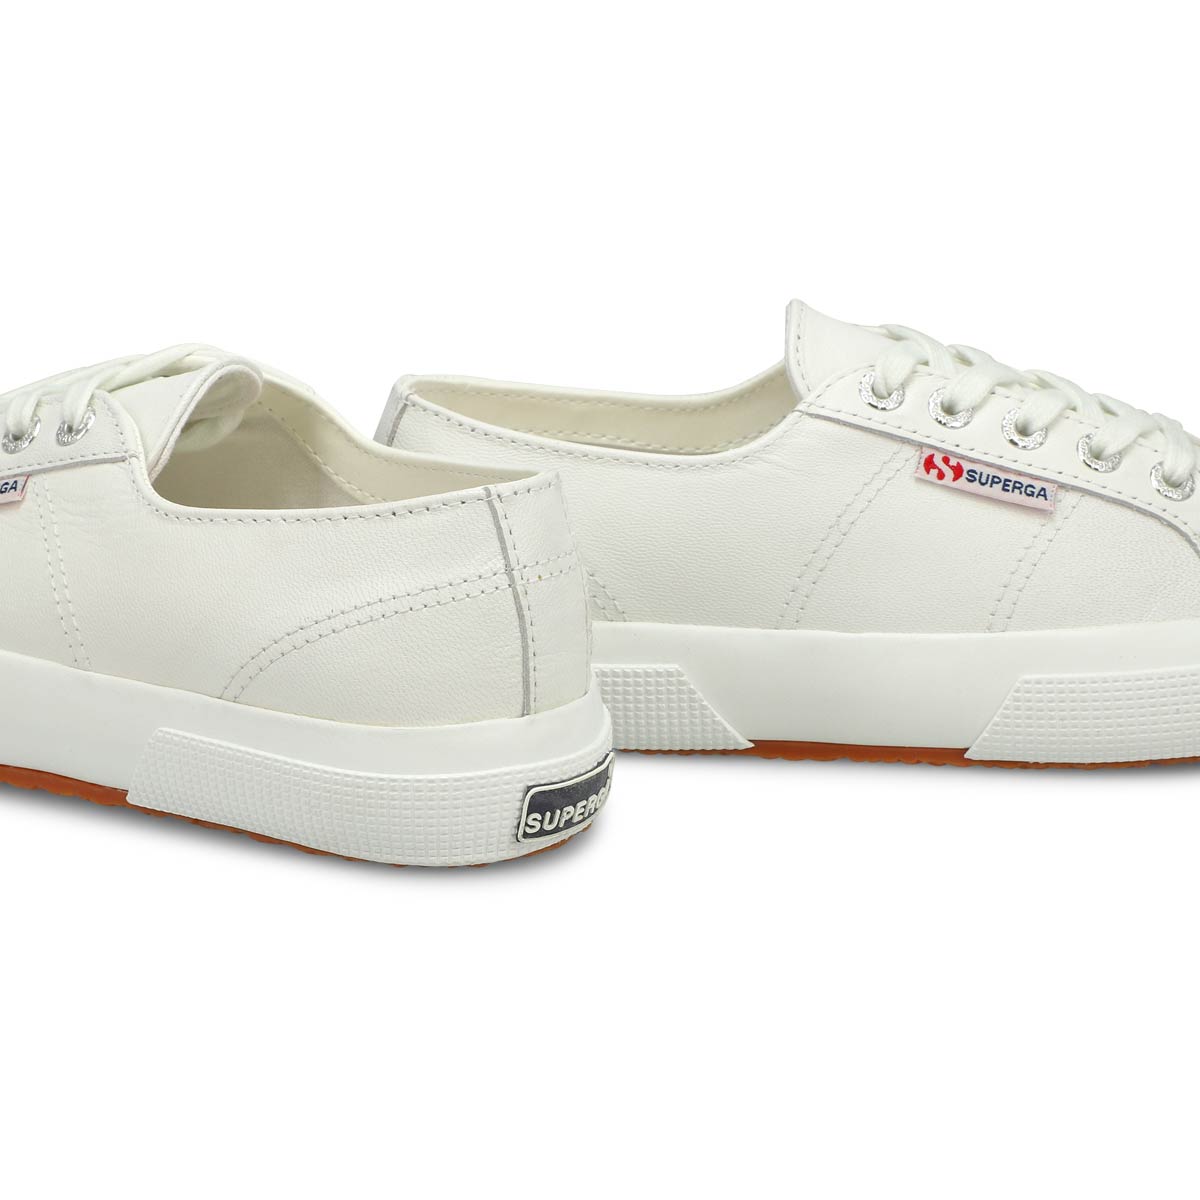 Women's Cotu Classic  Leather Sneaker - White